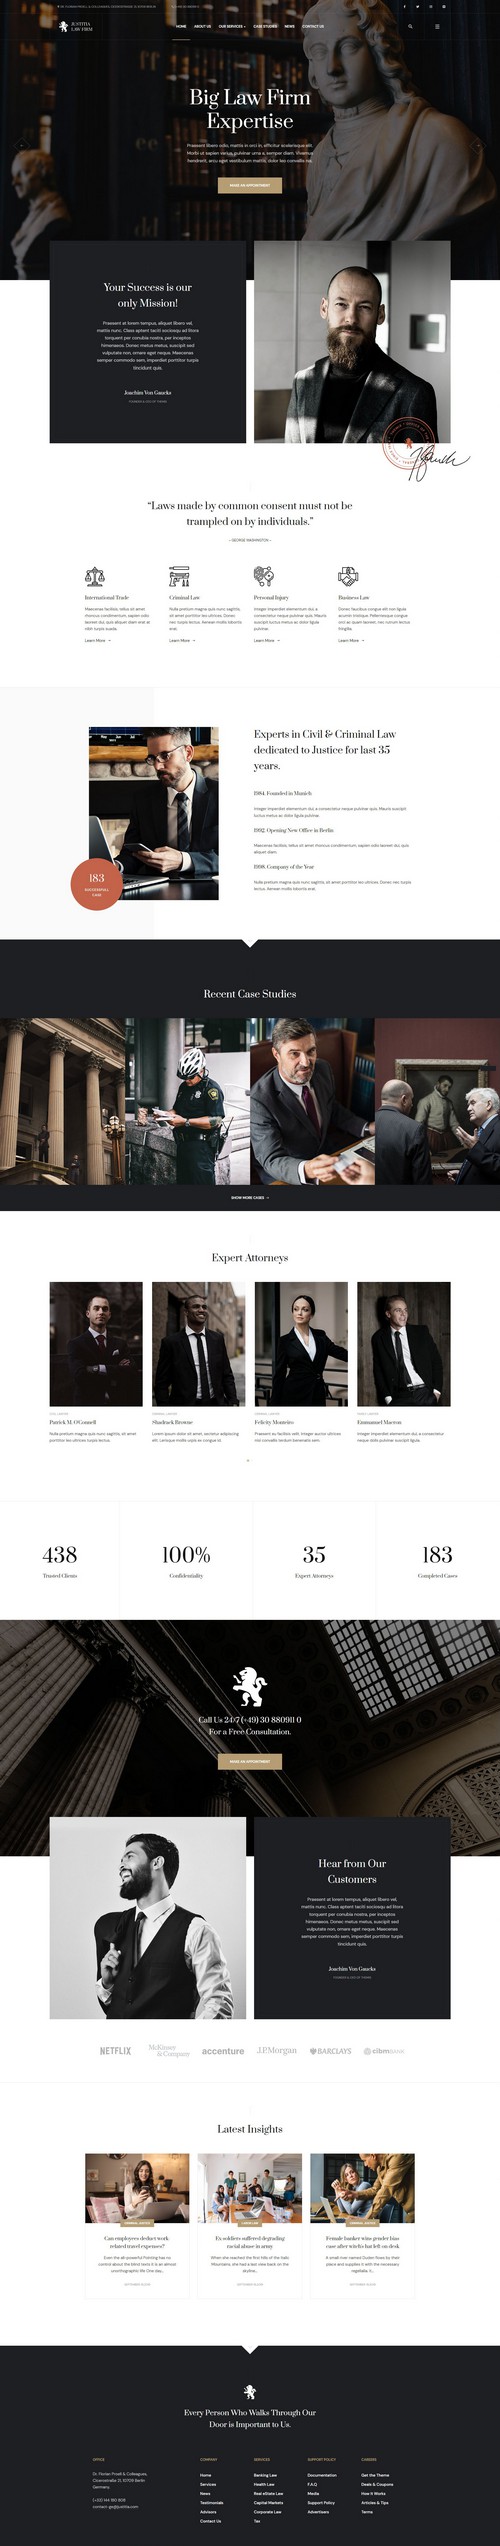 JA Justitia - Law Firm Lawyers Websites Joomla Template